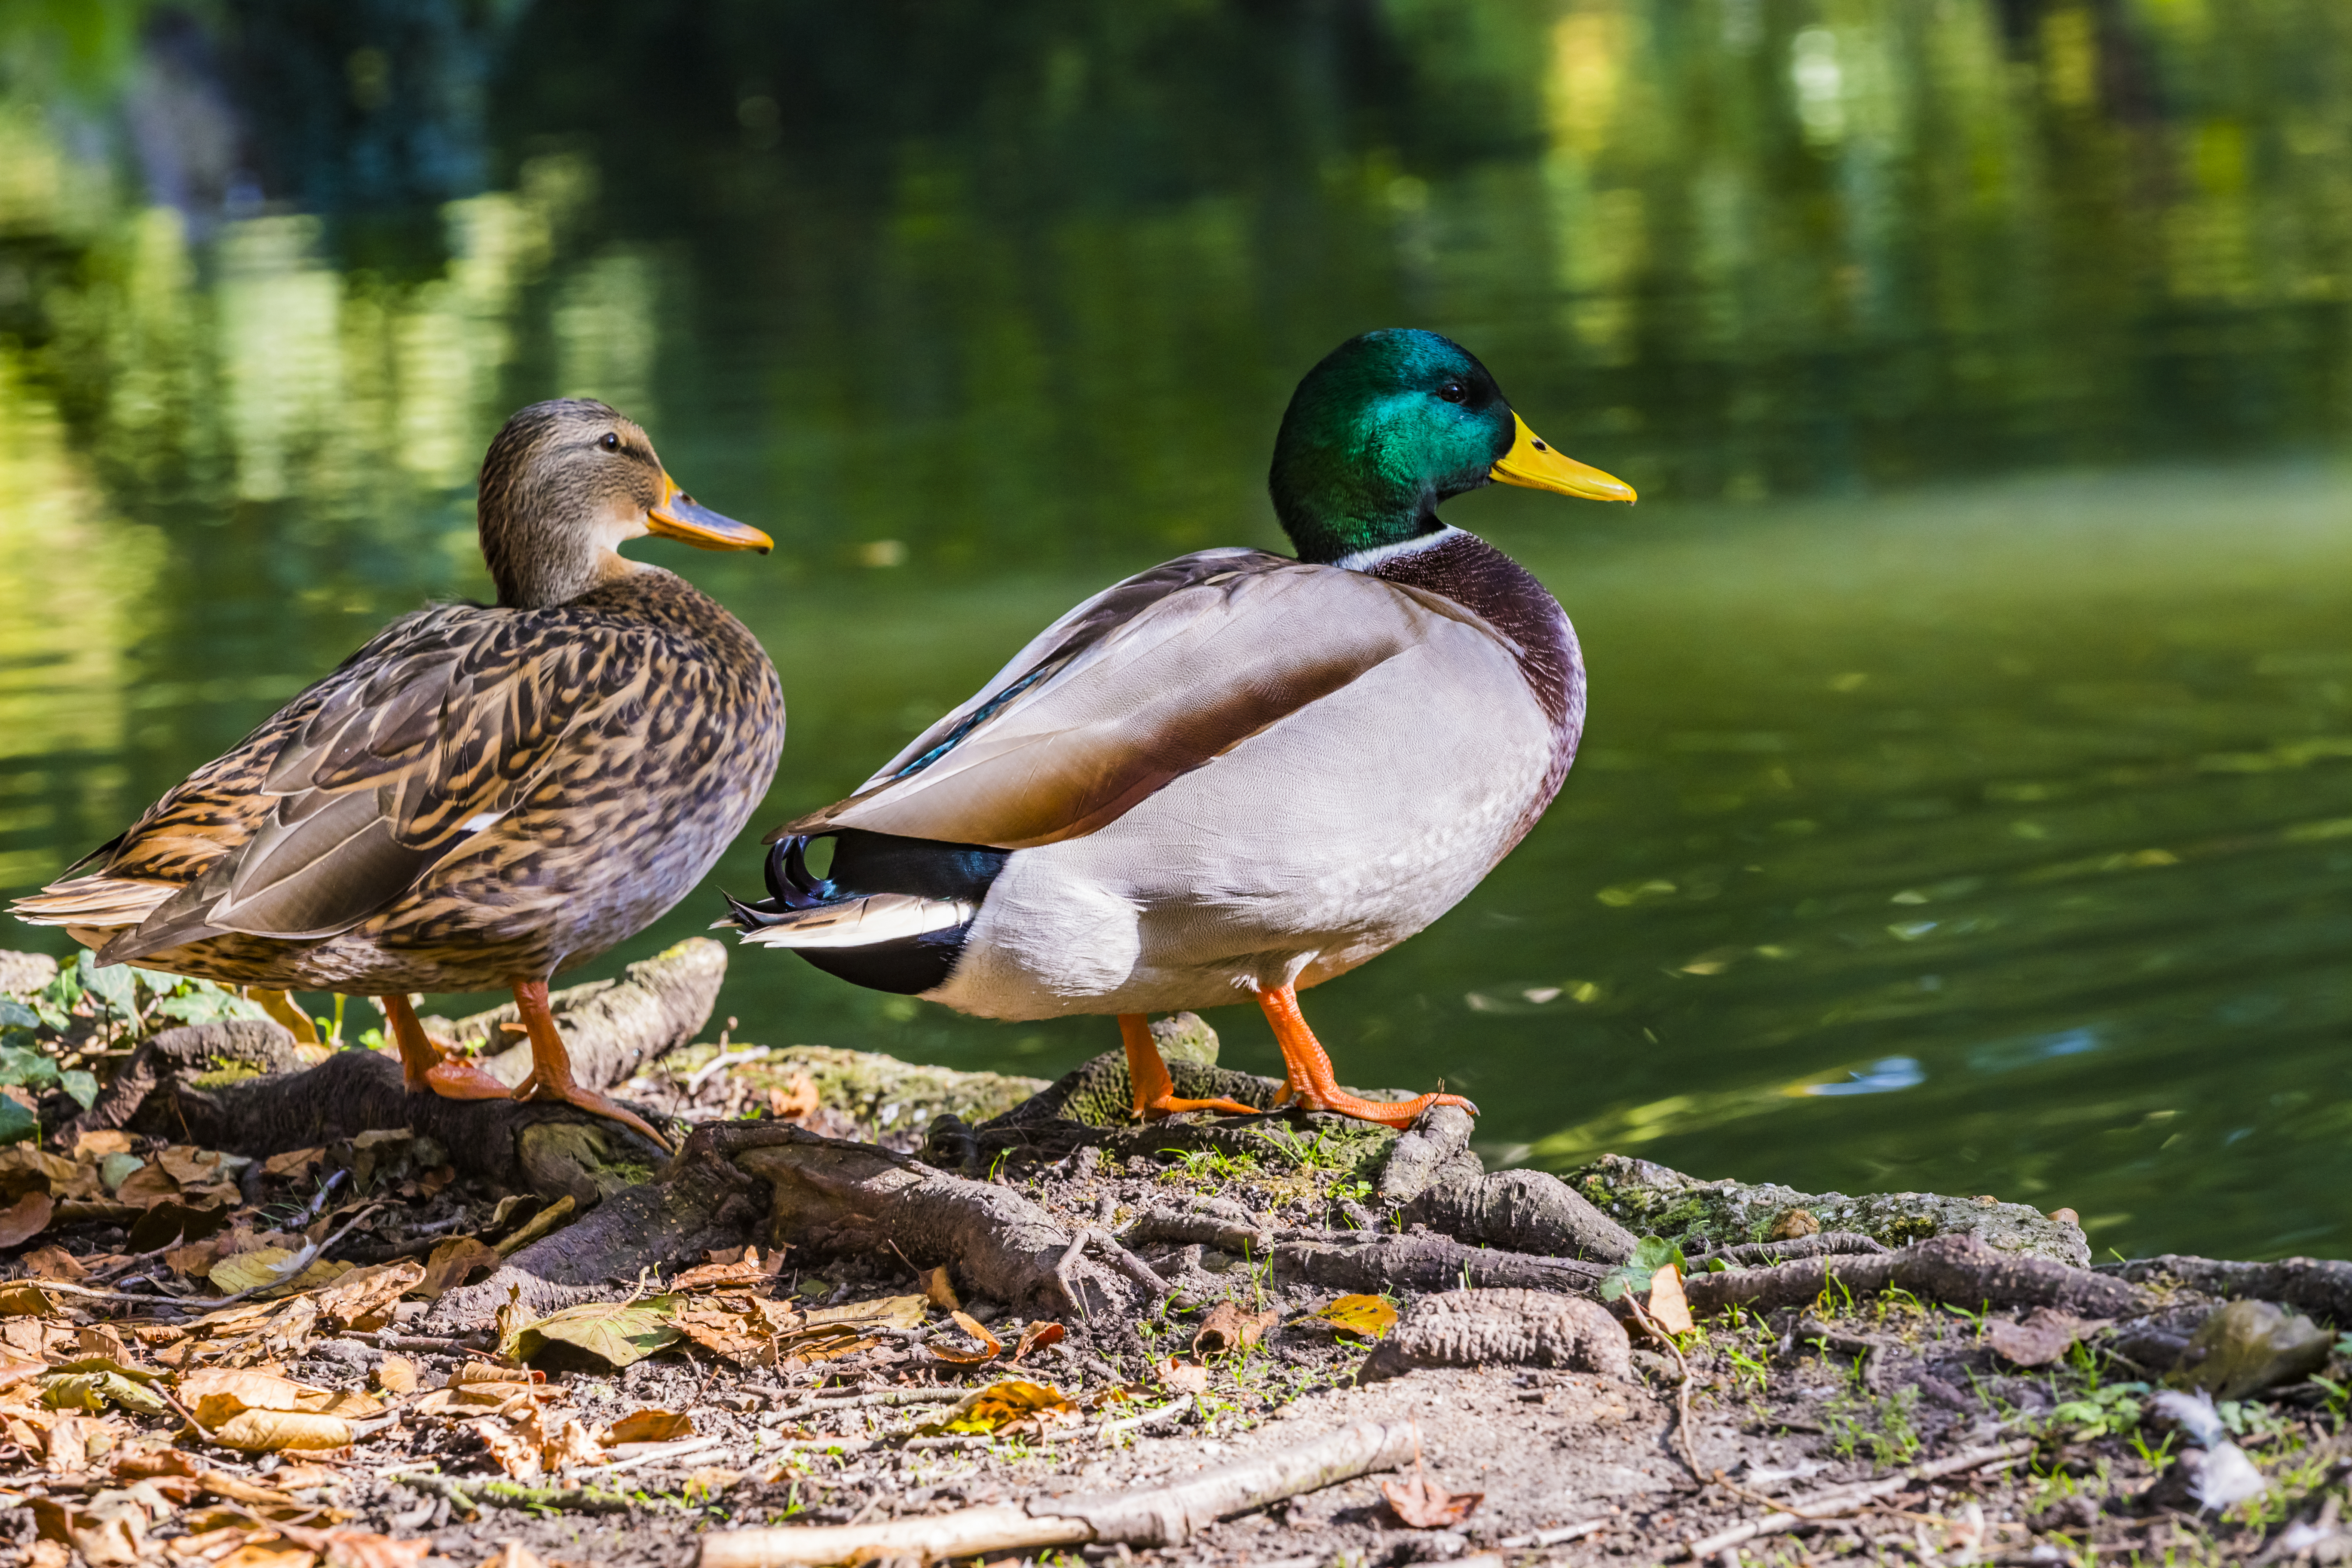 Ducks facing toward a pond